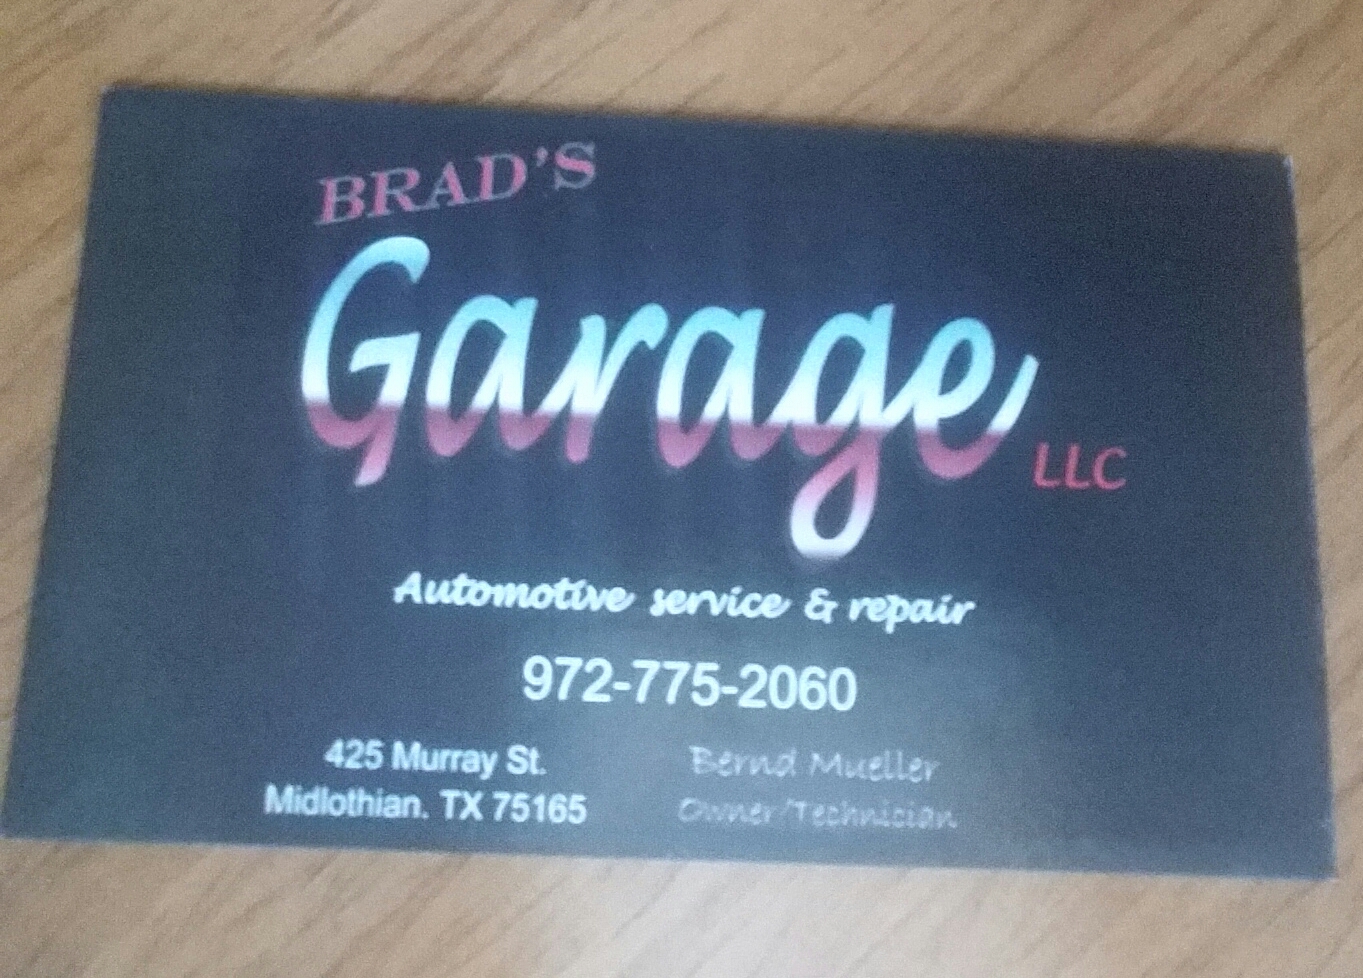 Brad's Garage LLC